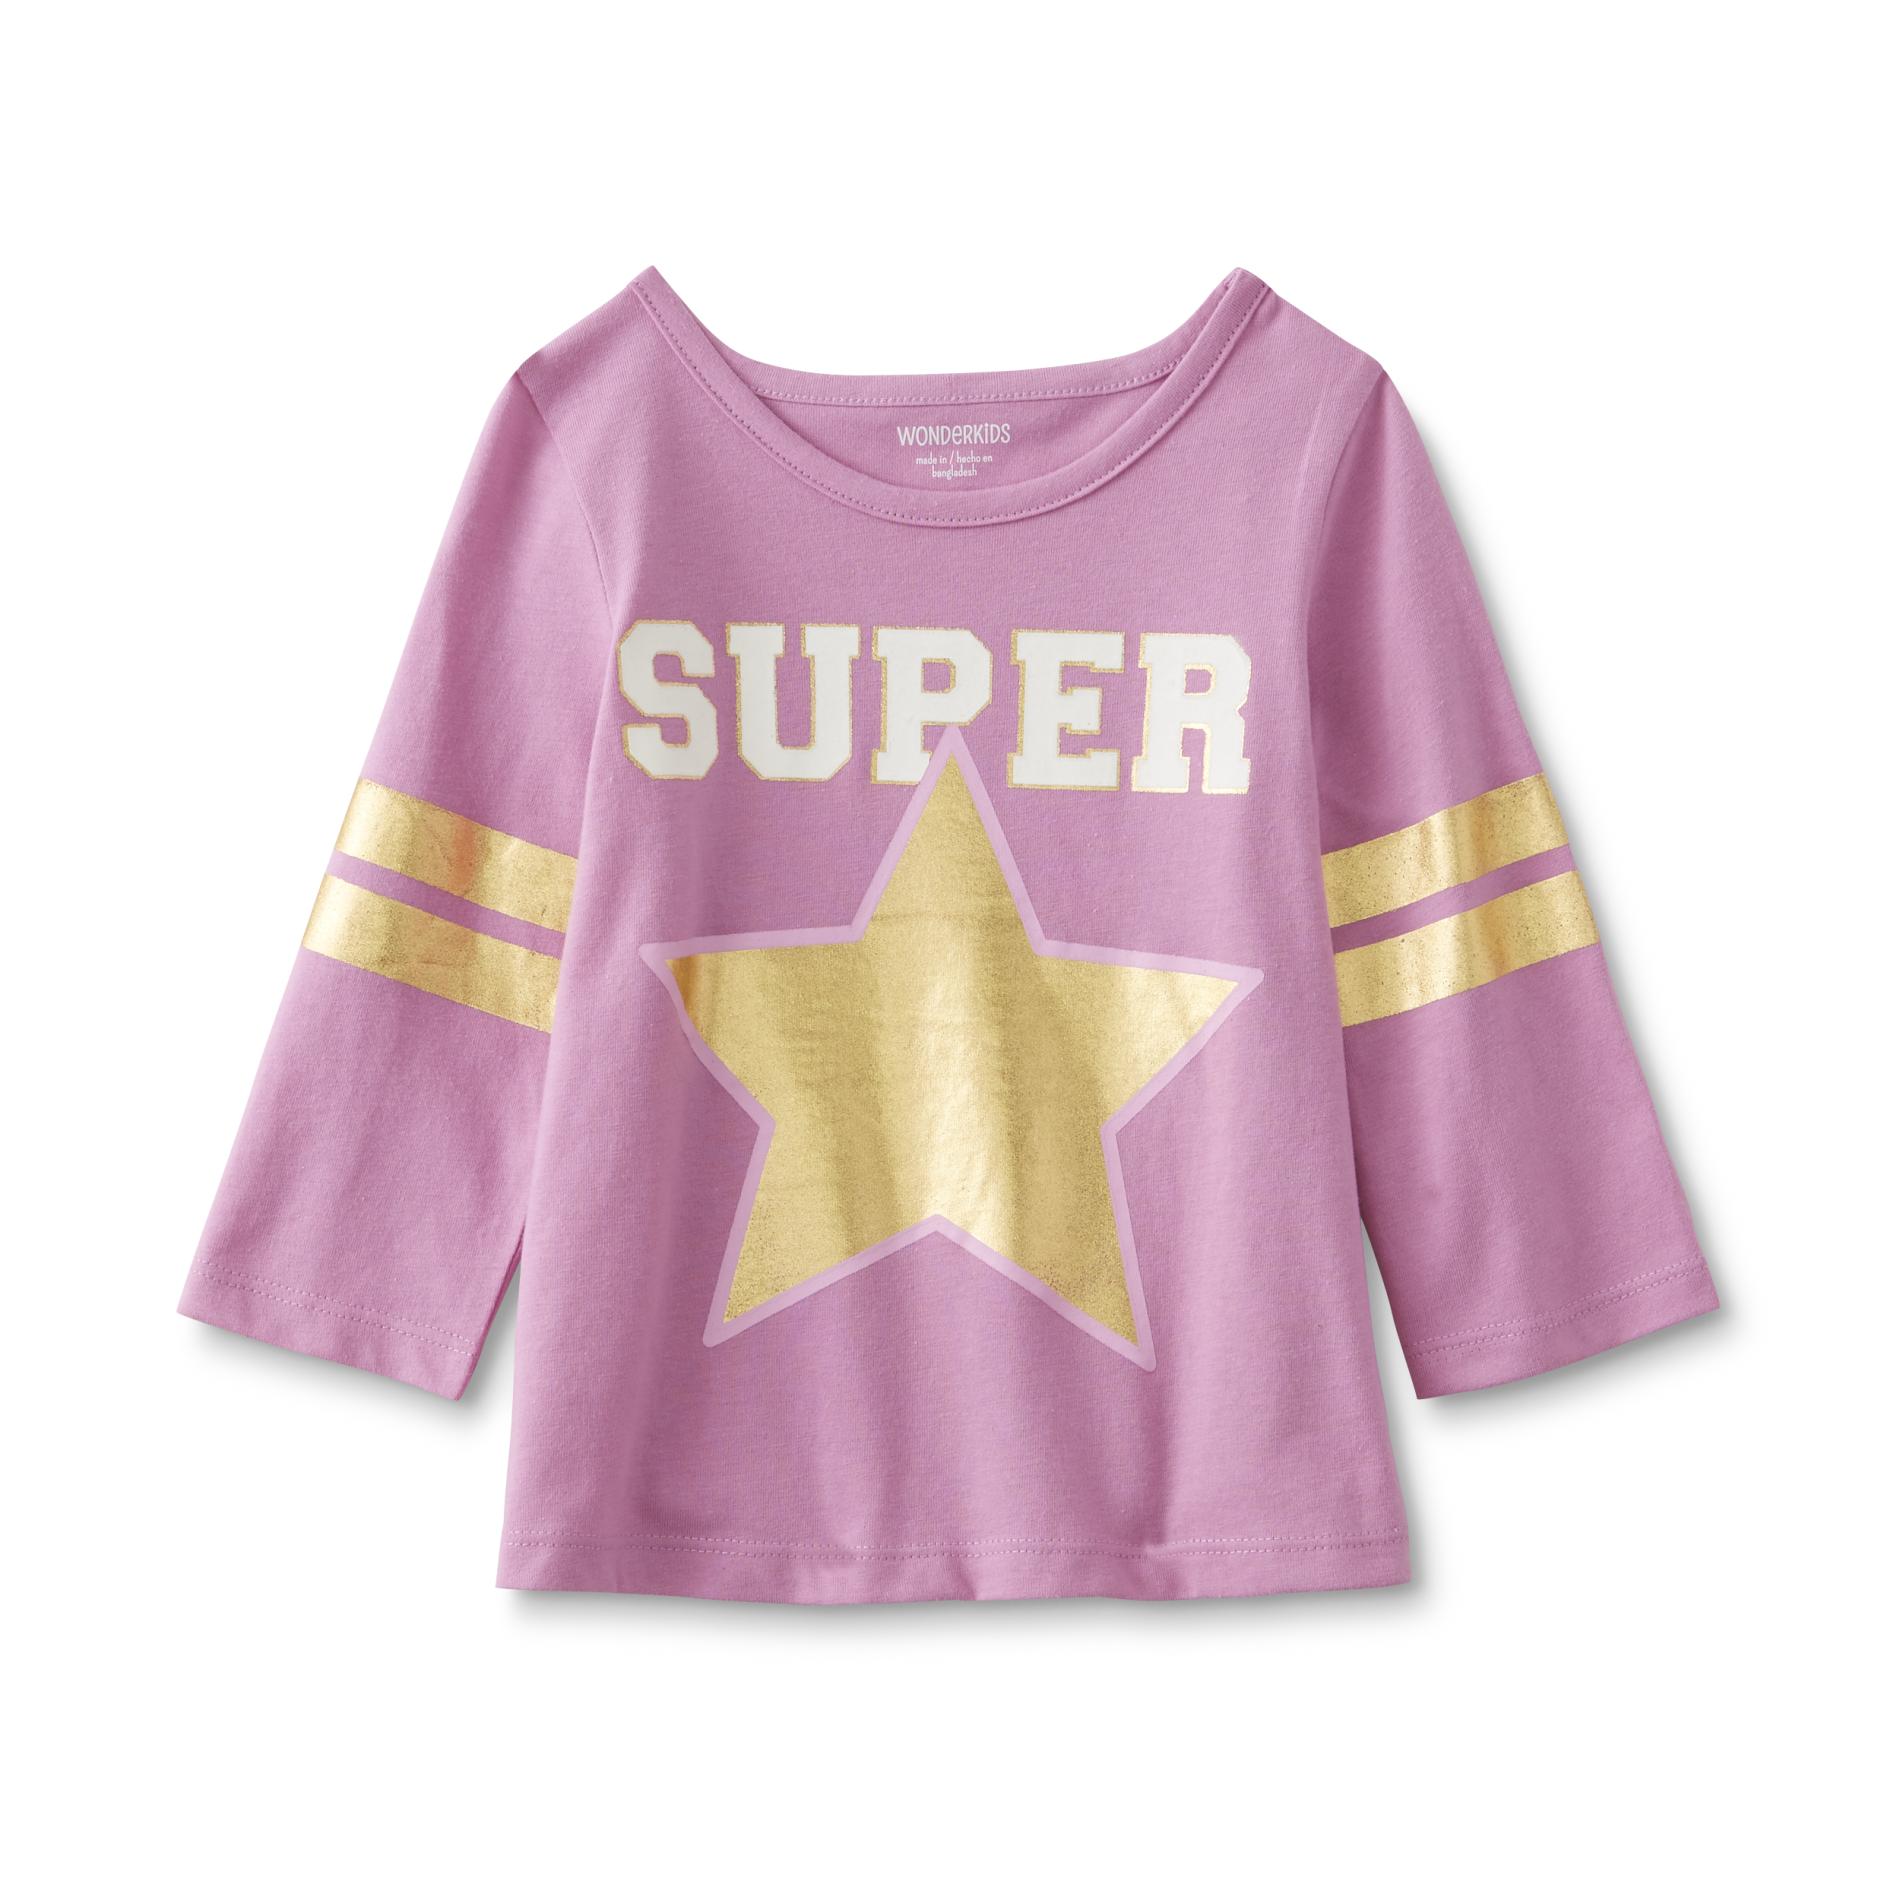 WonderKids Infant & Toddler Girl's Graphic T-Shirt - Superstar